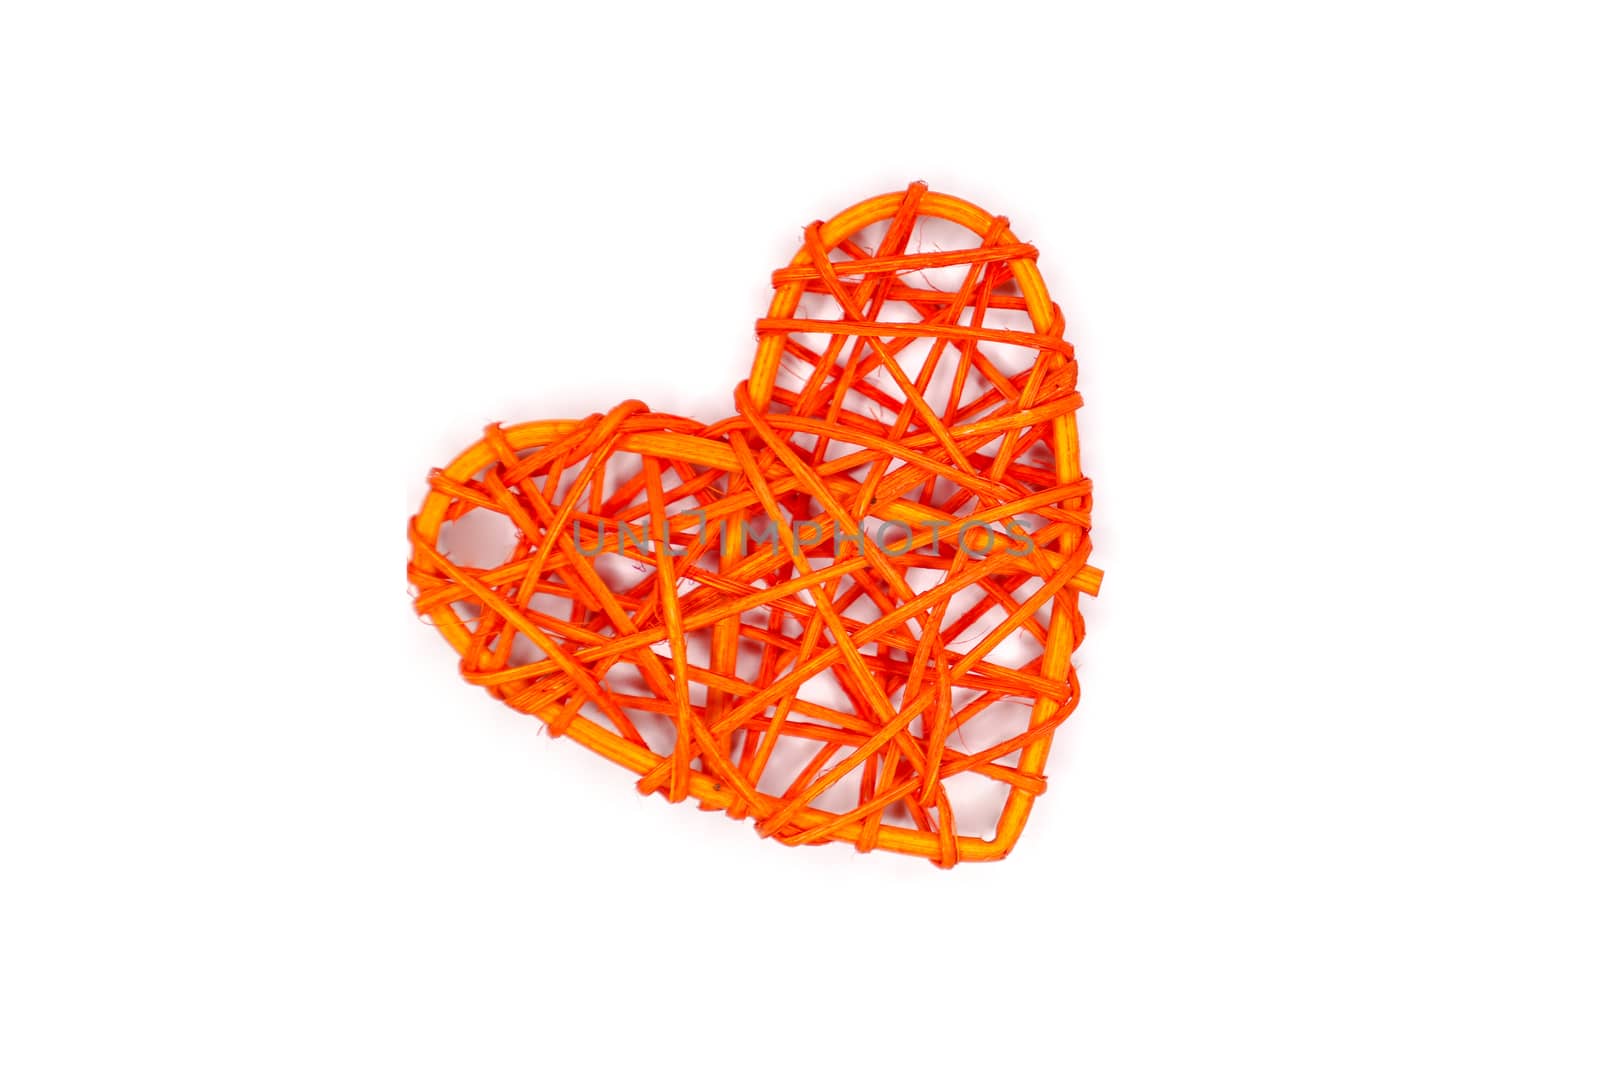 handmade orange rattan heart, isolated on white background